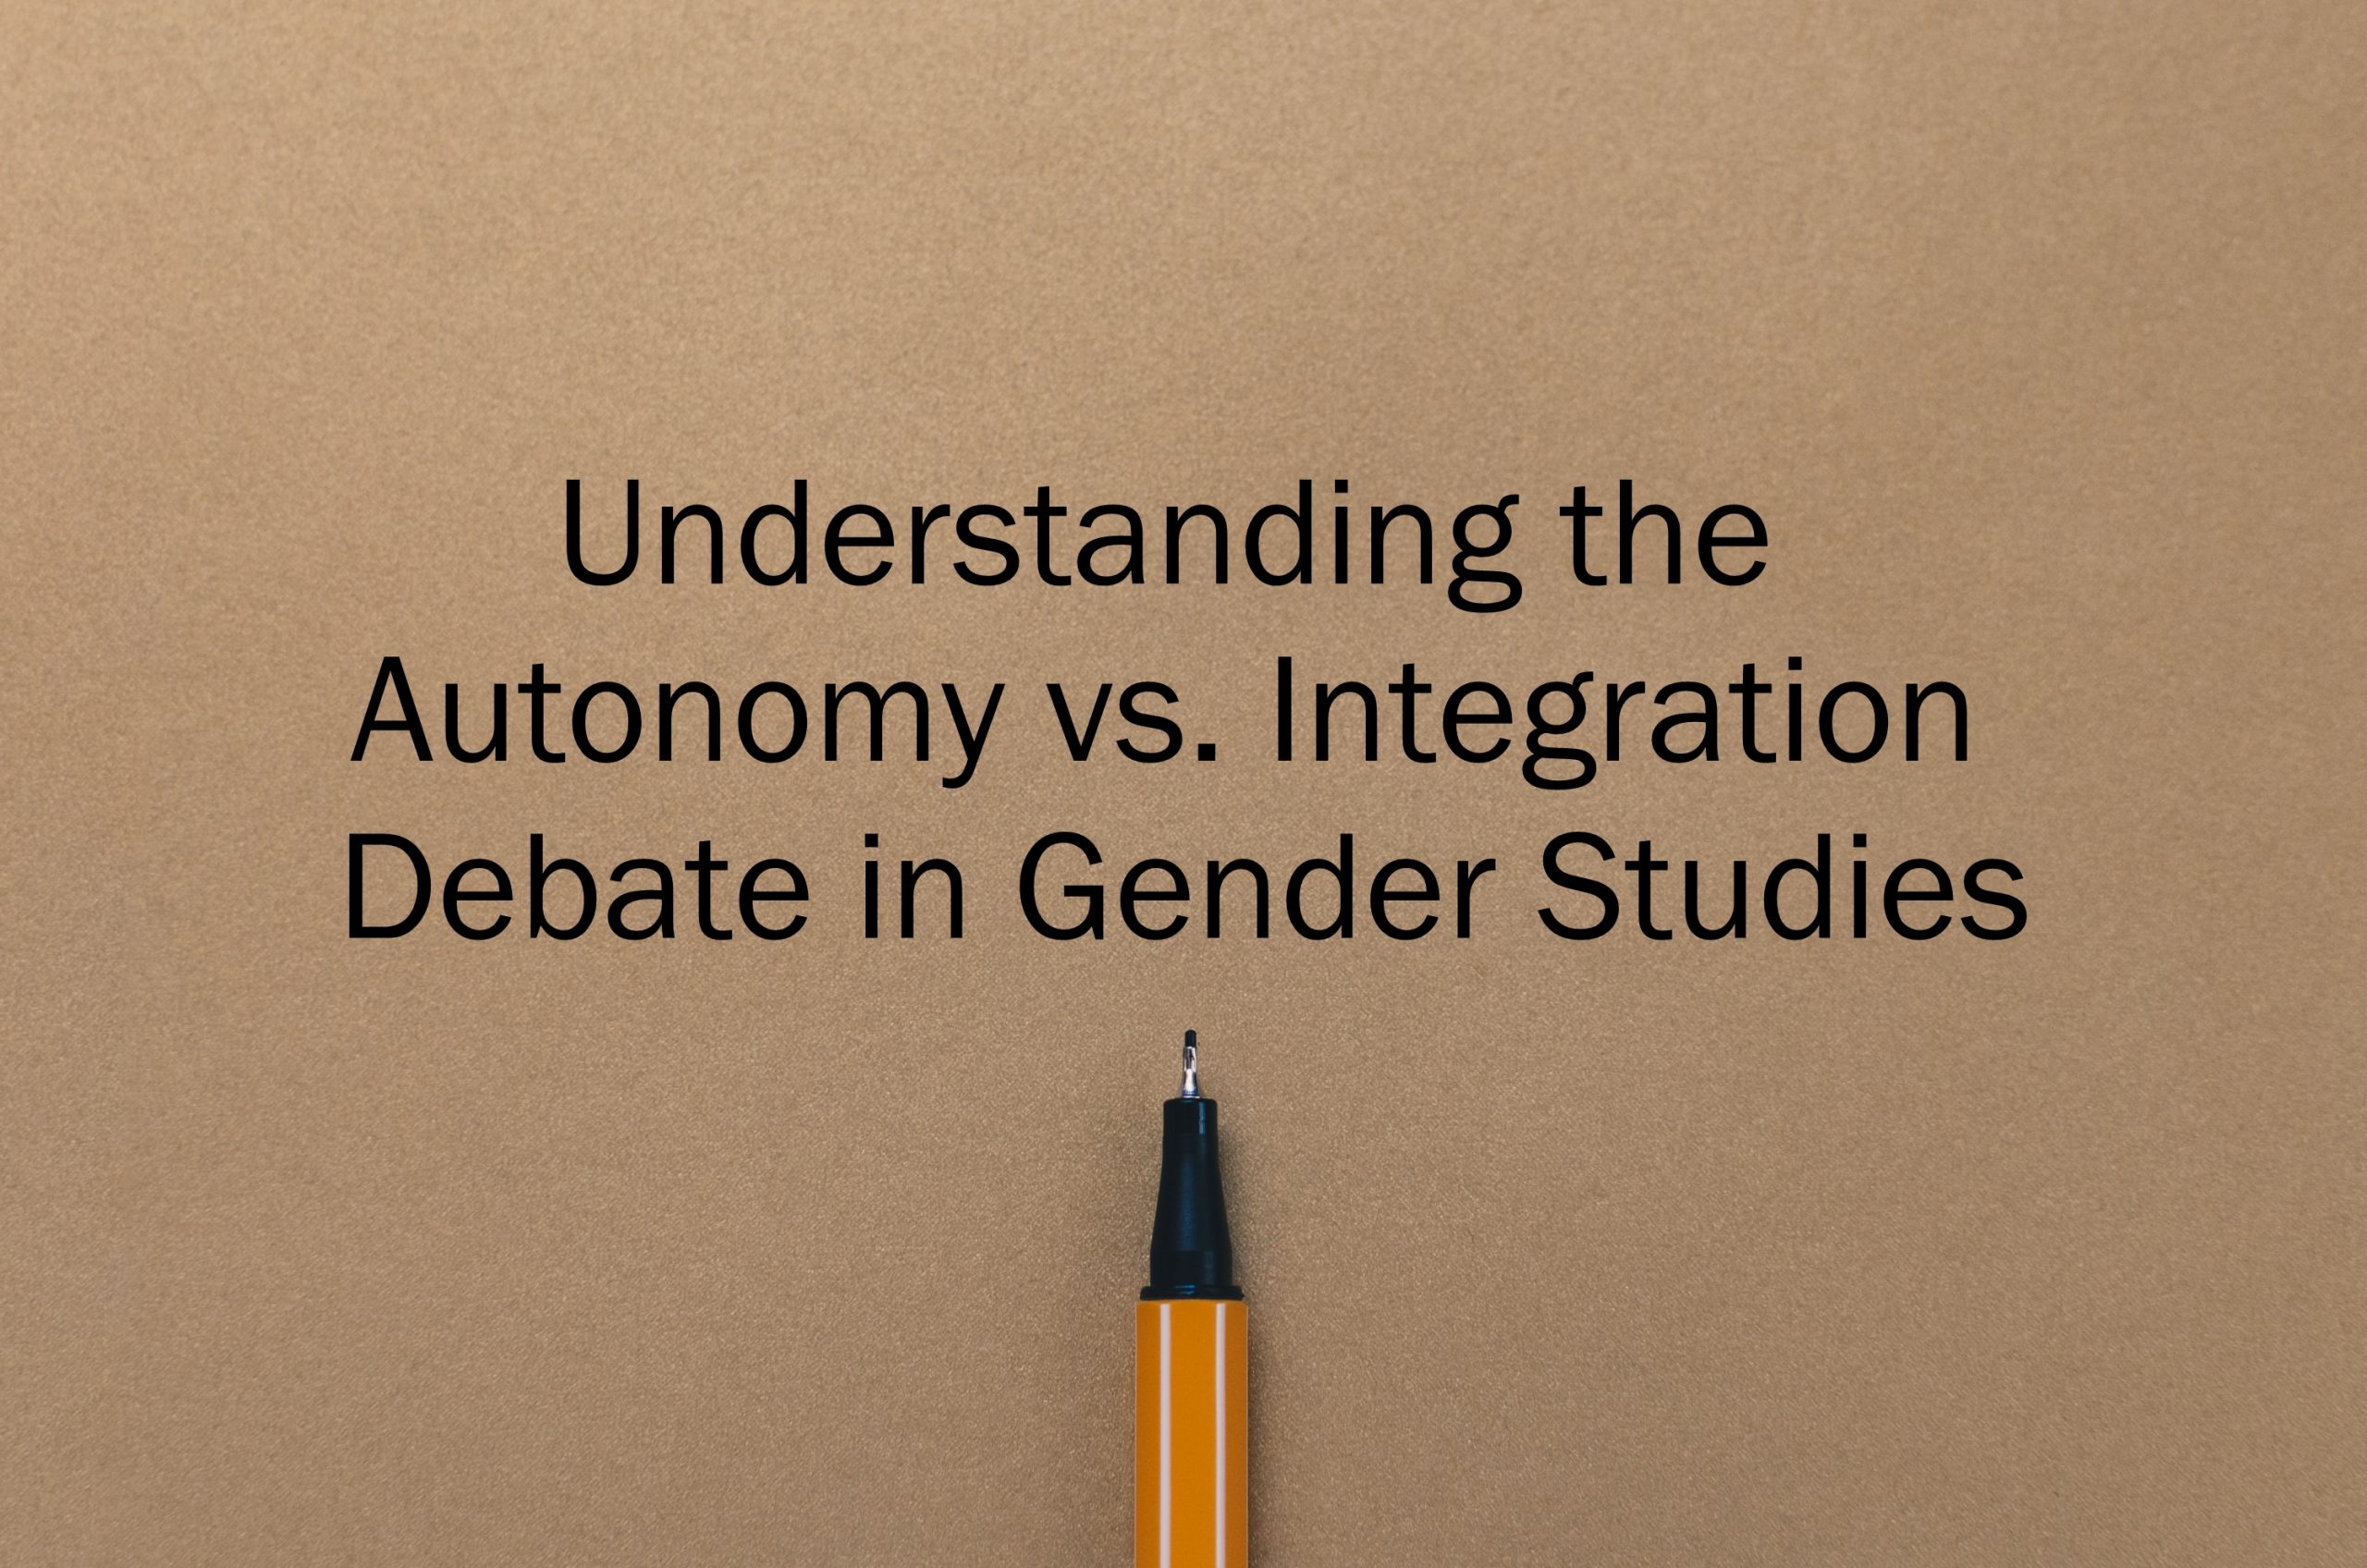 Autonomy vs. Integration Debate in Gender Studies